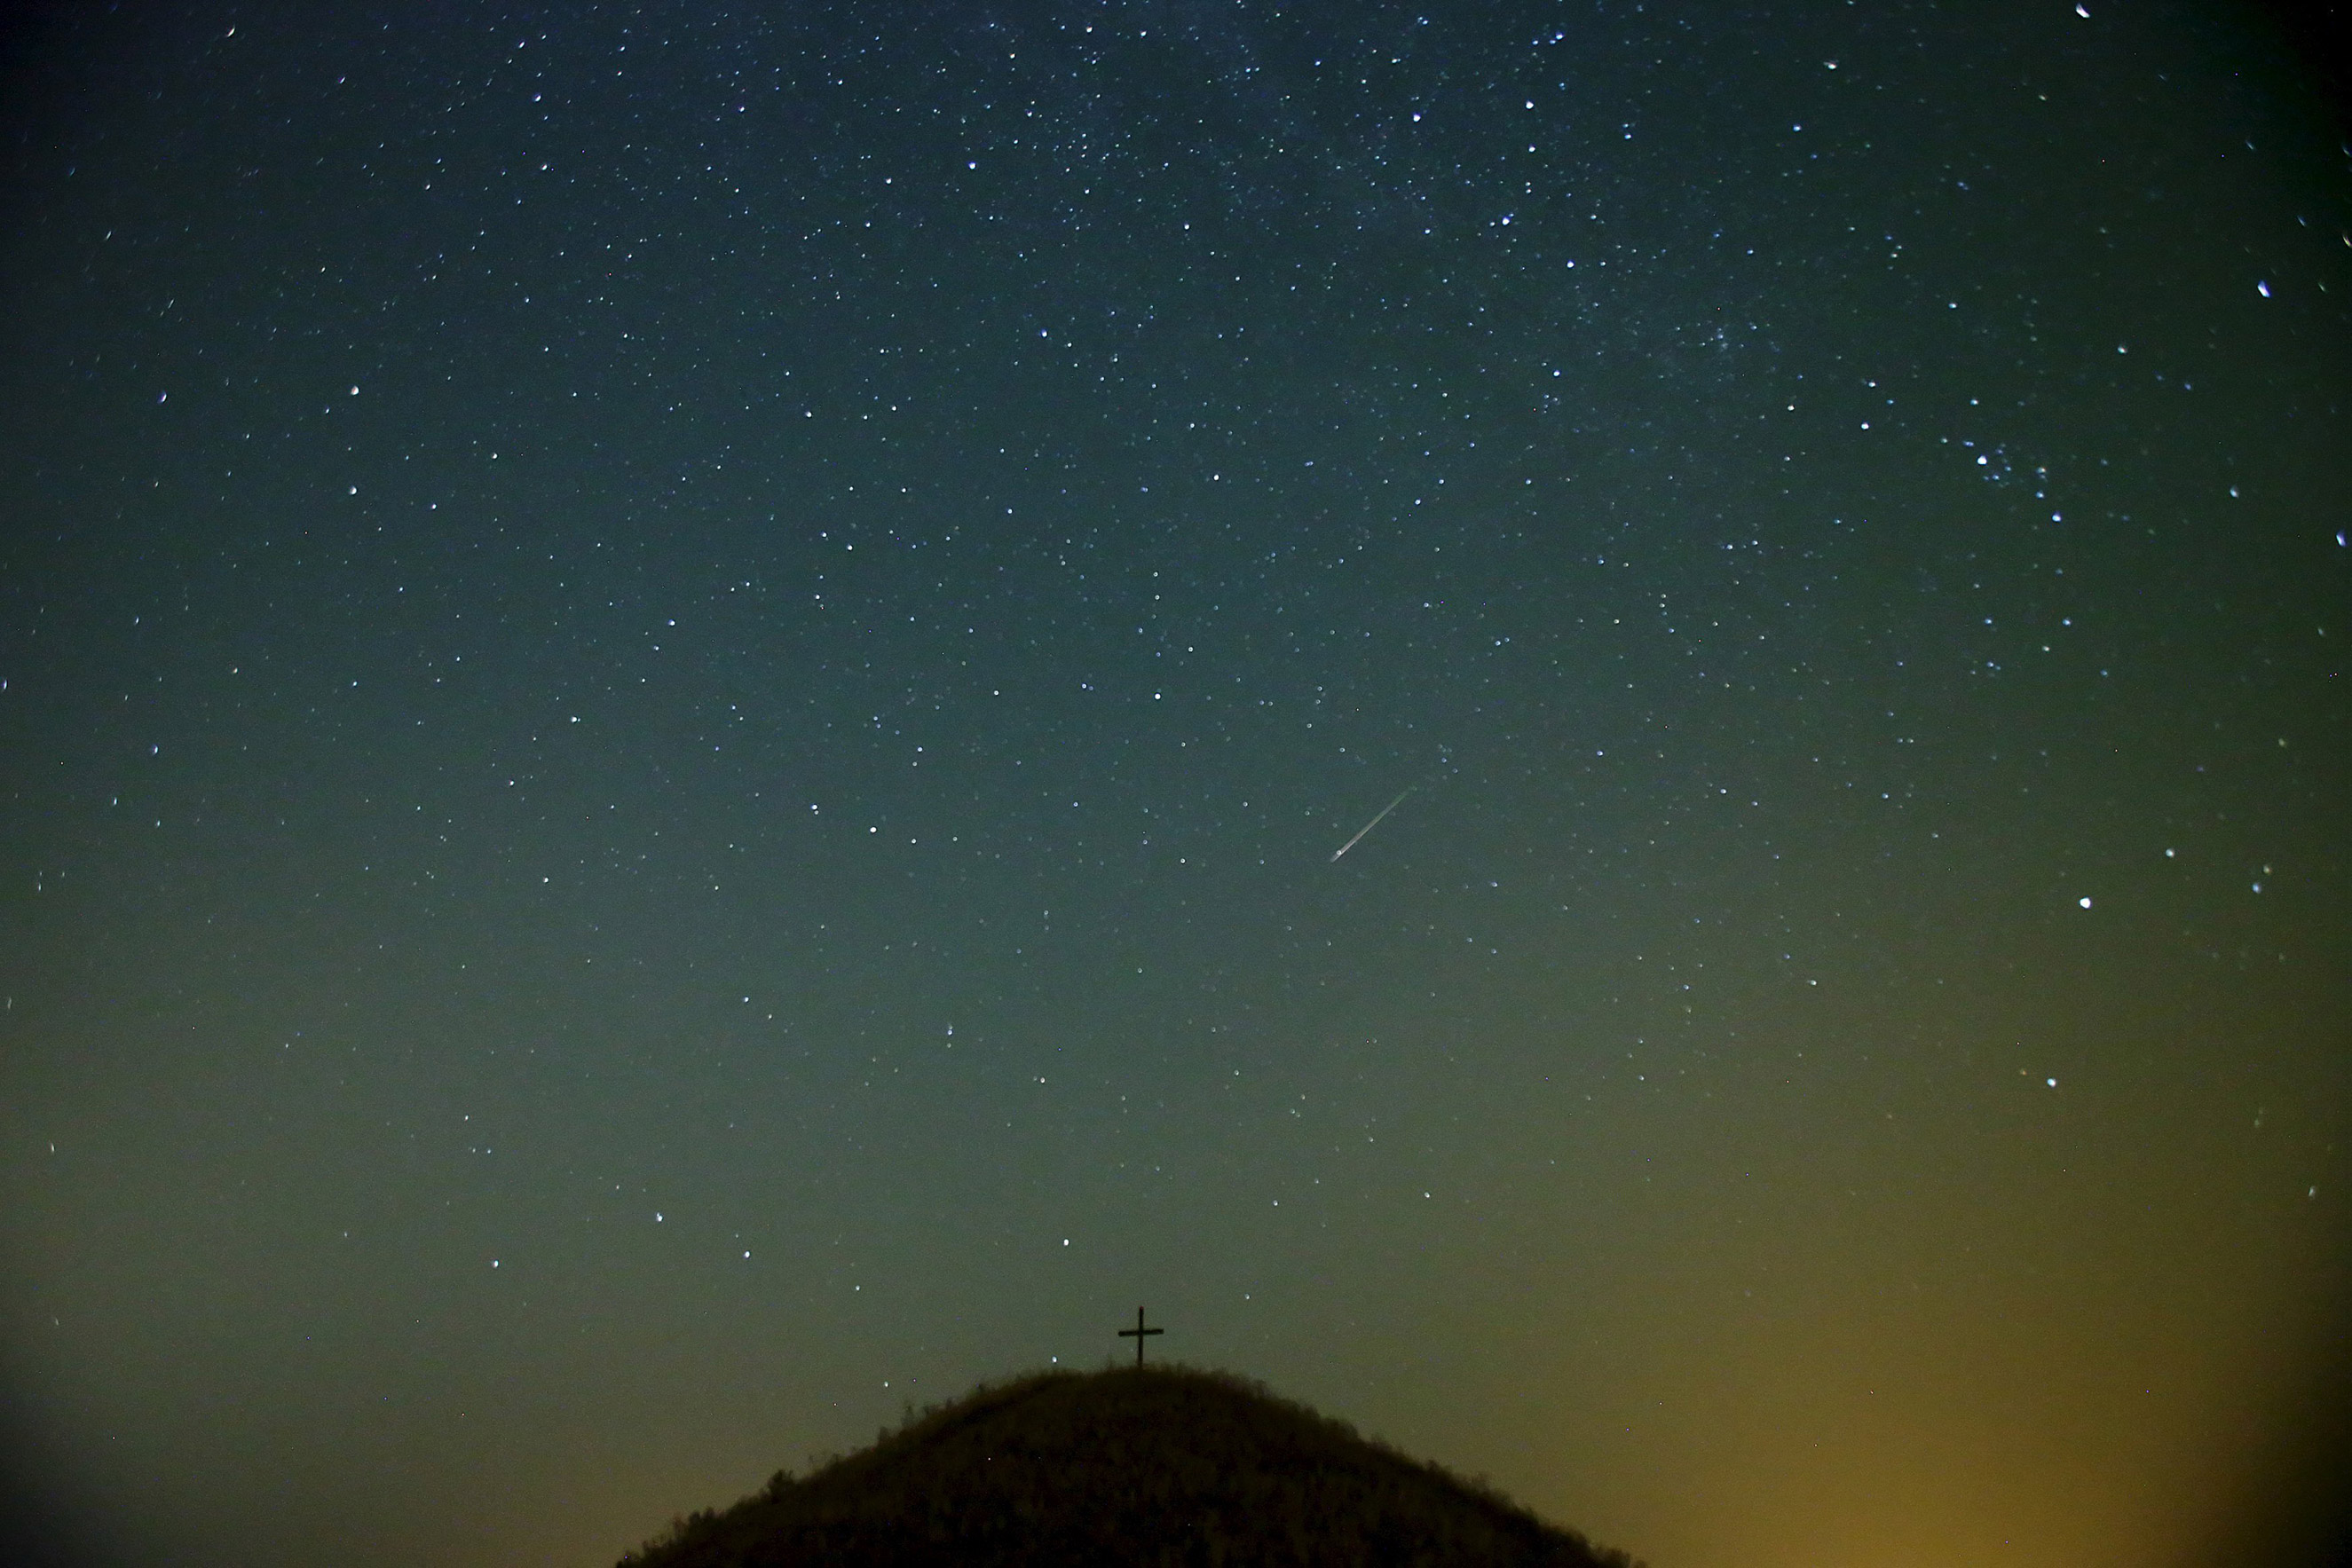 The Perseid meteor shower over Leeberg hill near Grossmugl, Austria on Aug. 13, 2015.